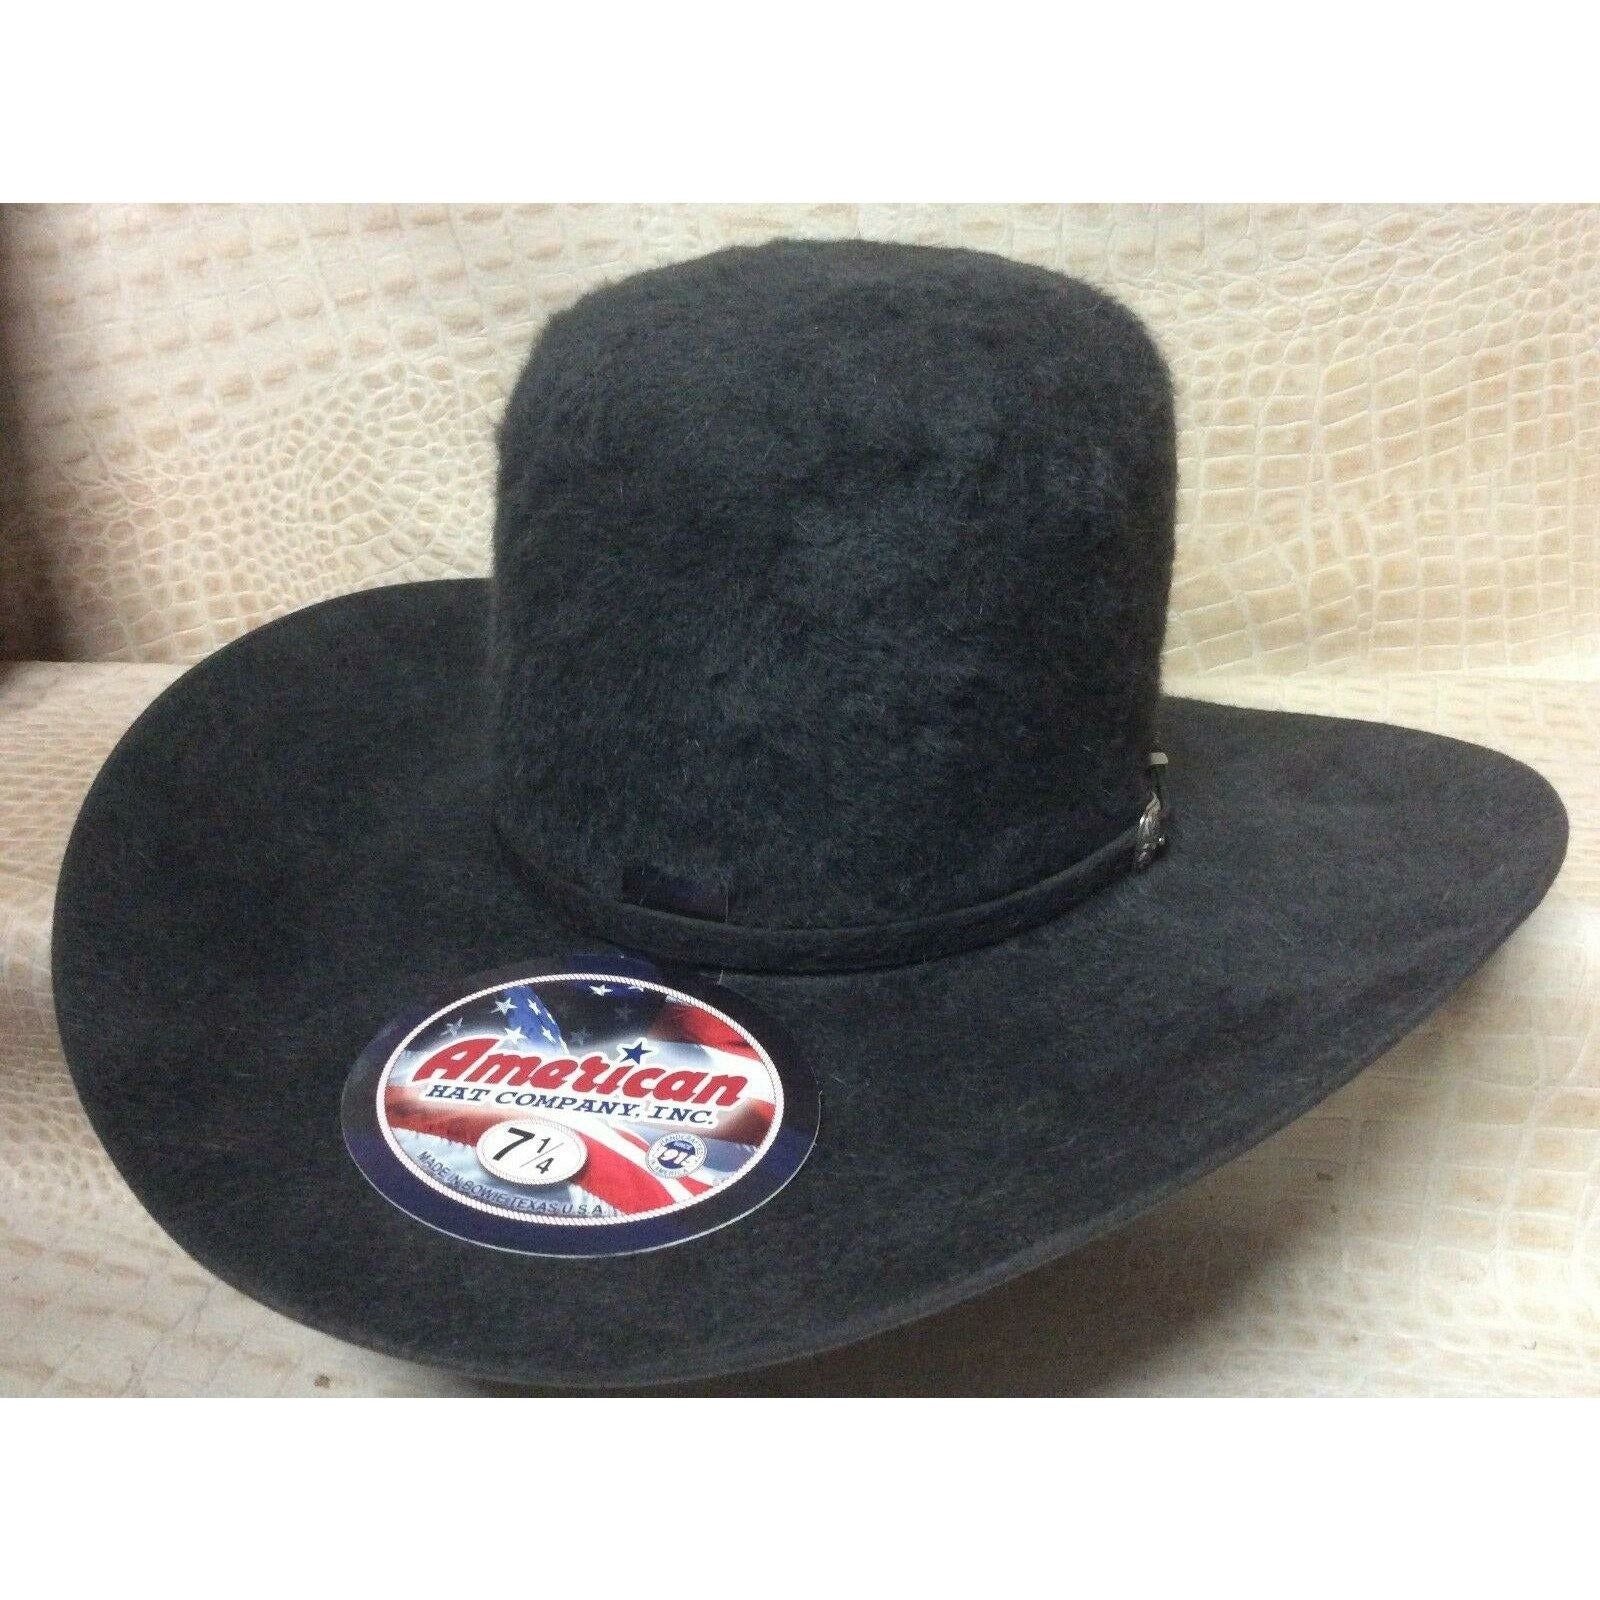 American Hat Co. Grizzly 20X Long Hair Beaver Fur Felt Cowboy Hat Western Rodeo - CWesternwear